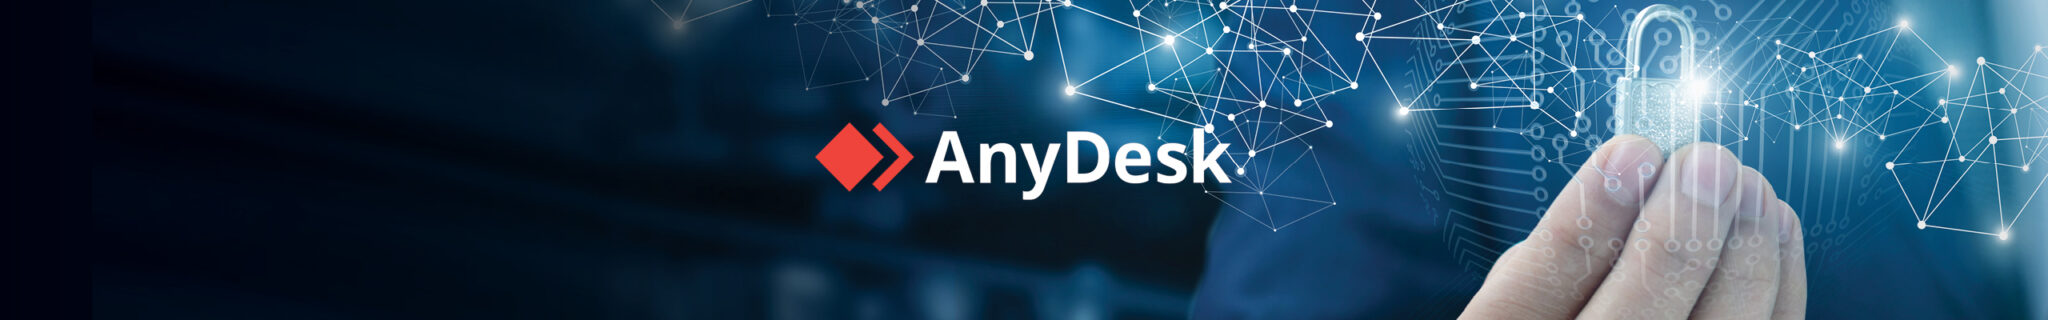 anydesk app fraud detection